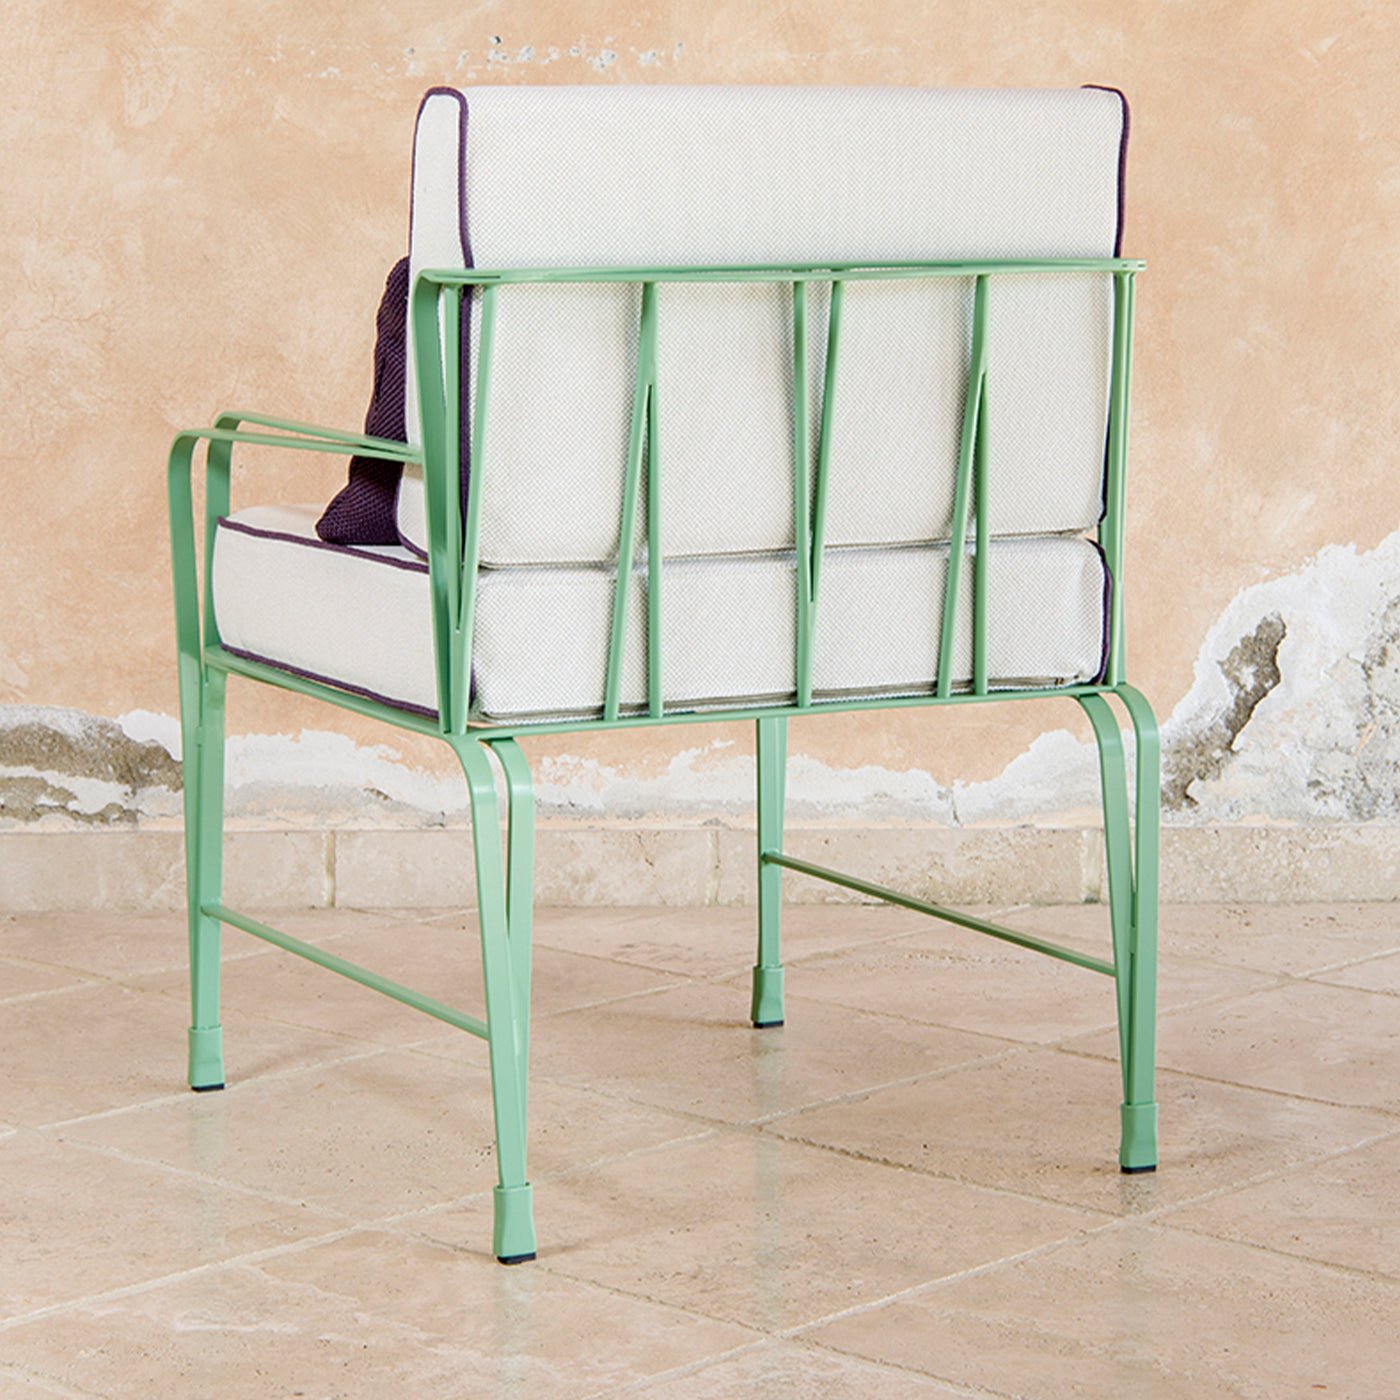 Marina Black Chair by Ciarmoli Queda Studio - Alternative view 5